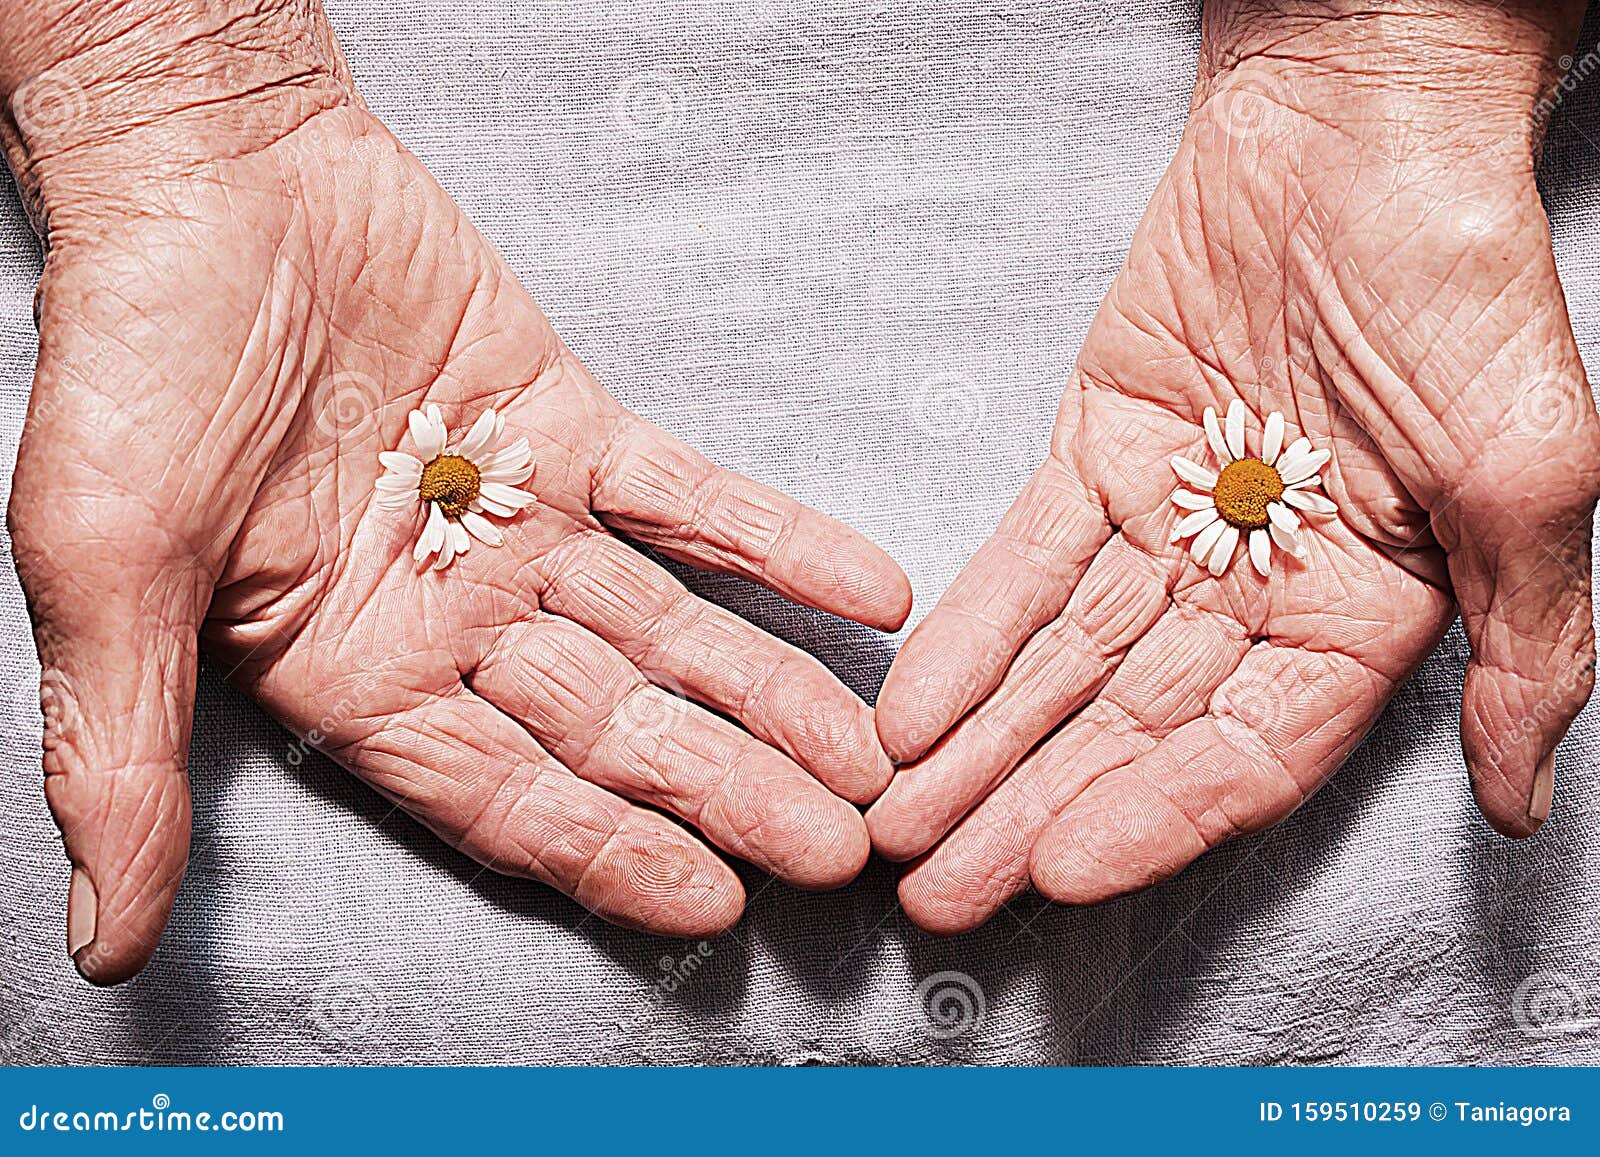 https://thumbs.dreamstime.com/z/hands-old-woman-holding-daisy-flowers-concept-longevity-seniors-day-hands-old-woman-holding-daisy-flowers-159510259.jpg